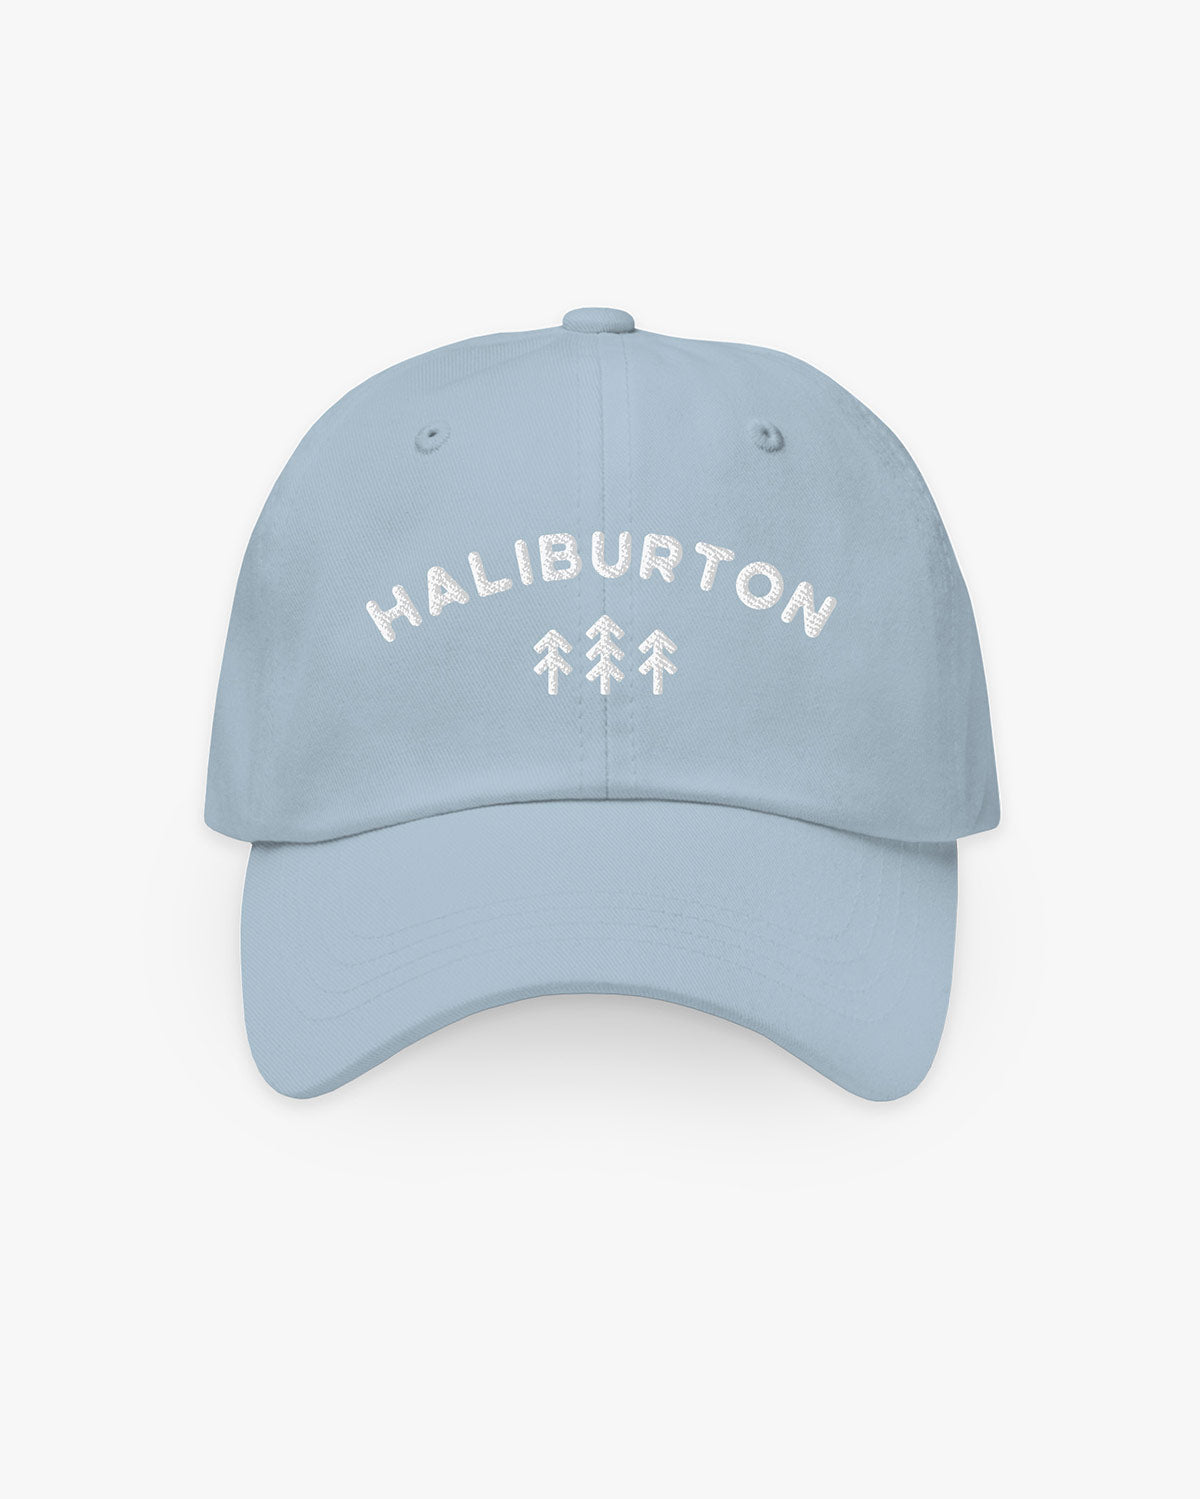 Trees - Haliburton - Hat